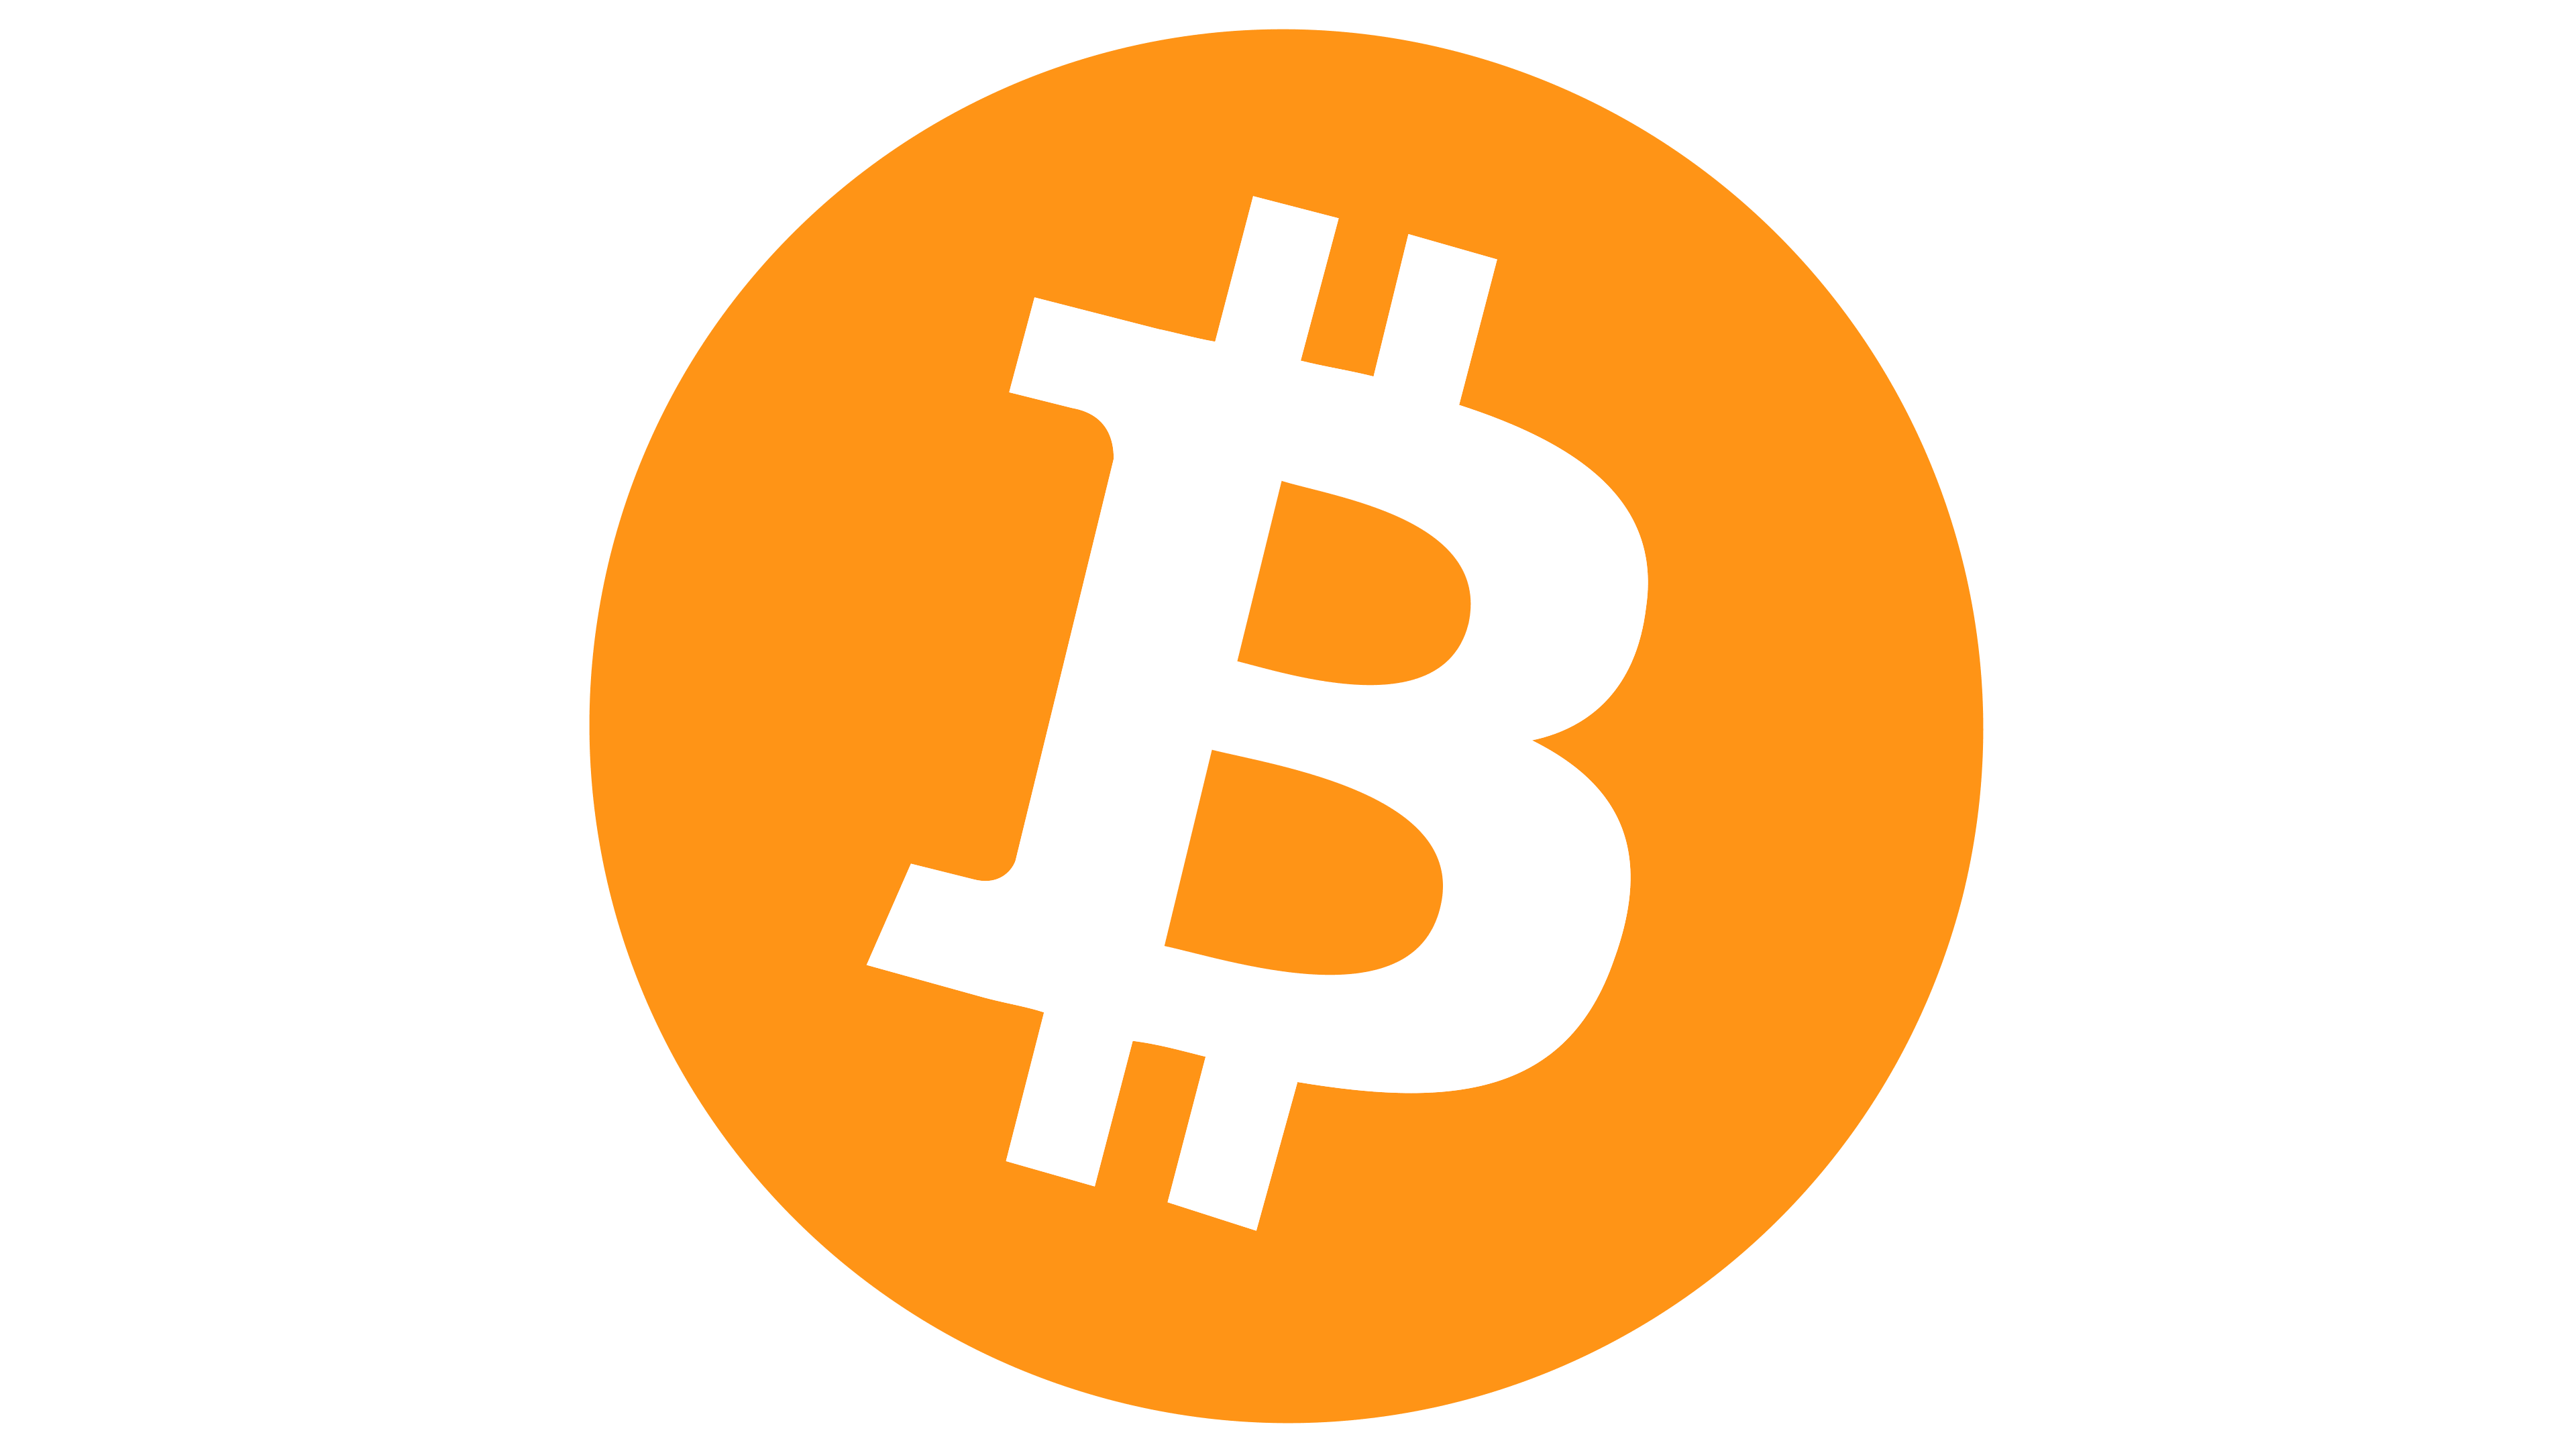 Criptocurrency - Bitcoin logo